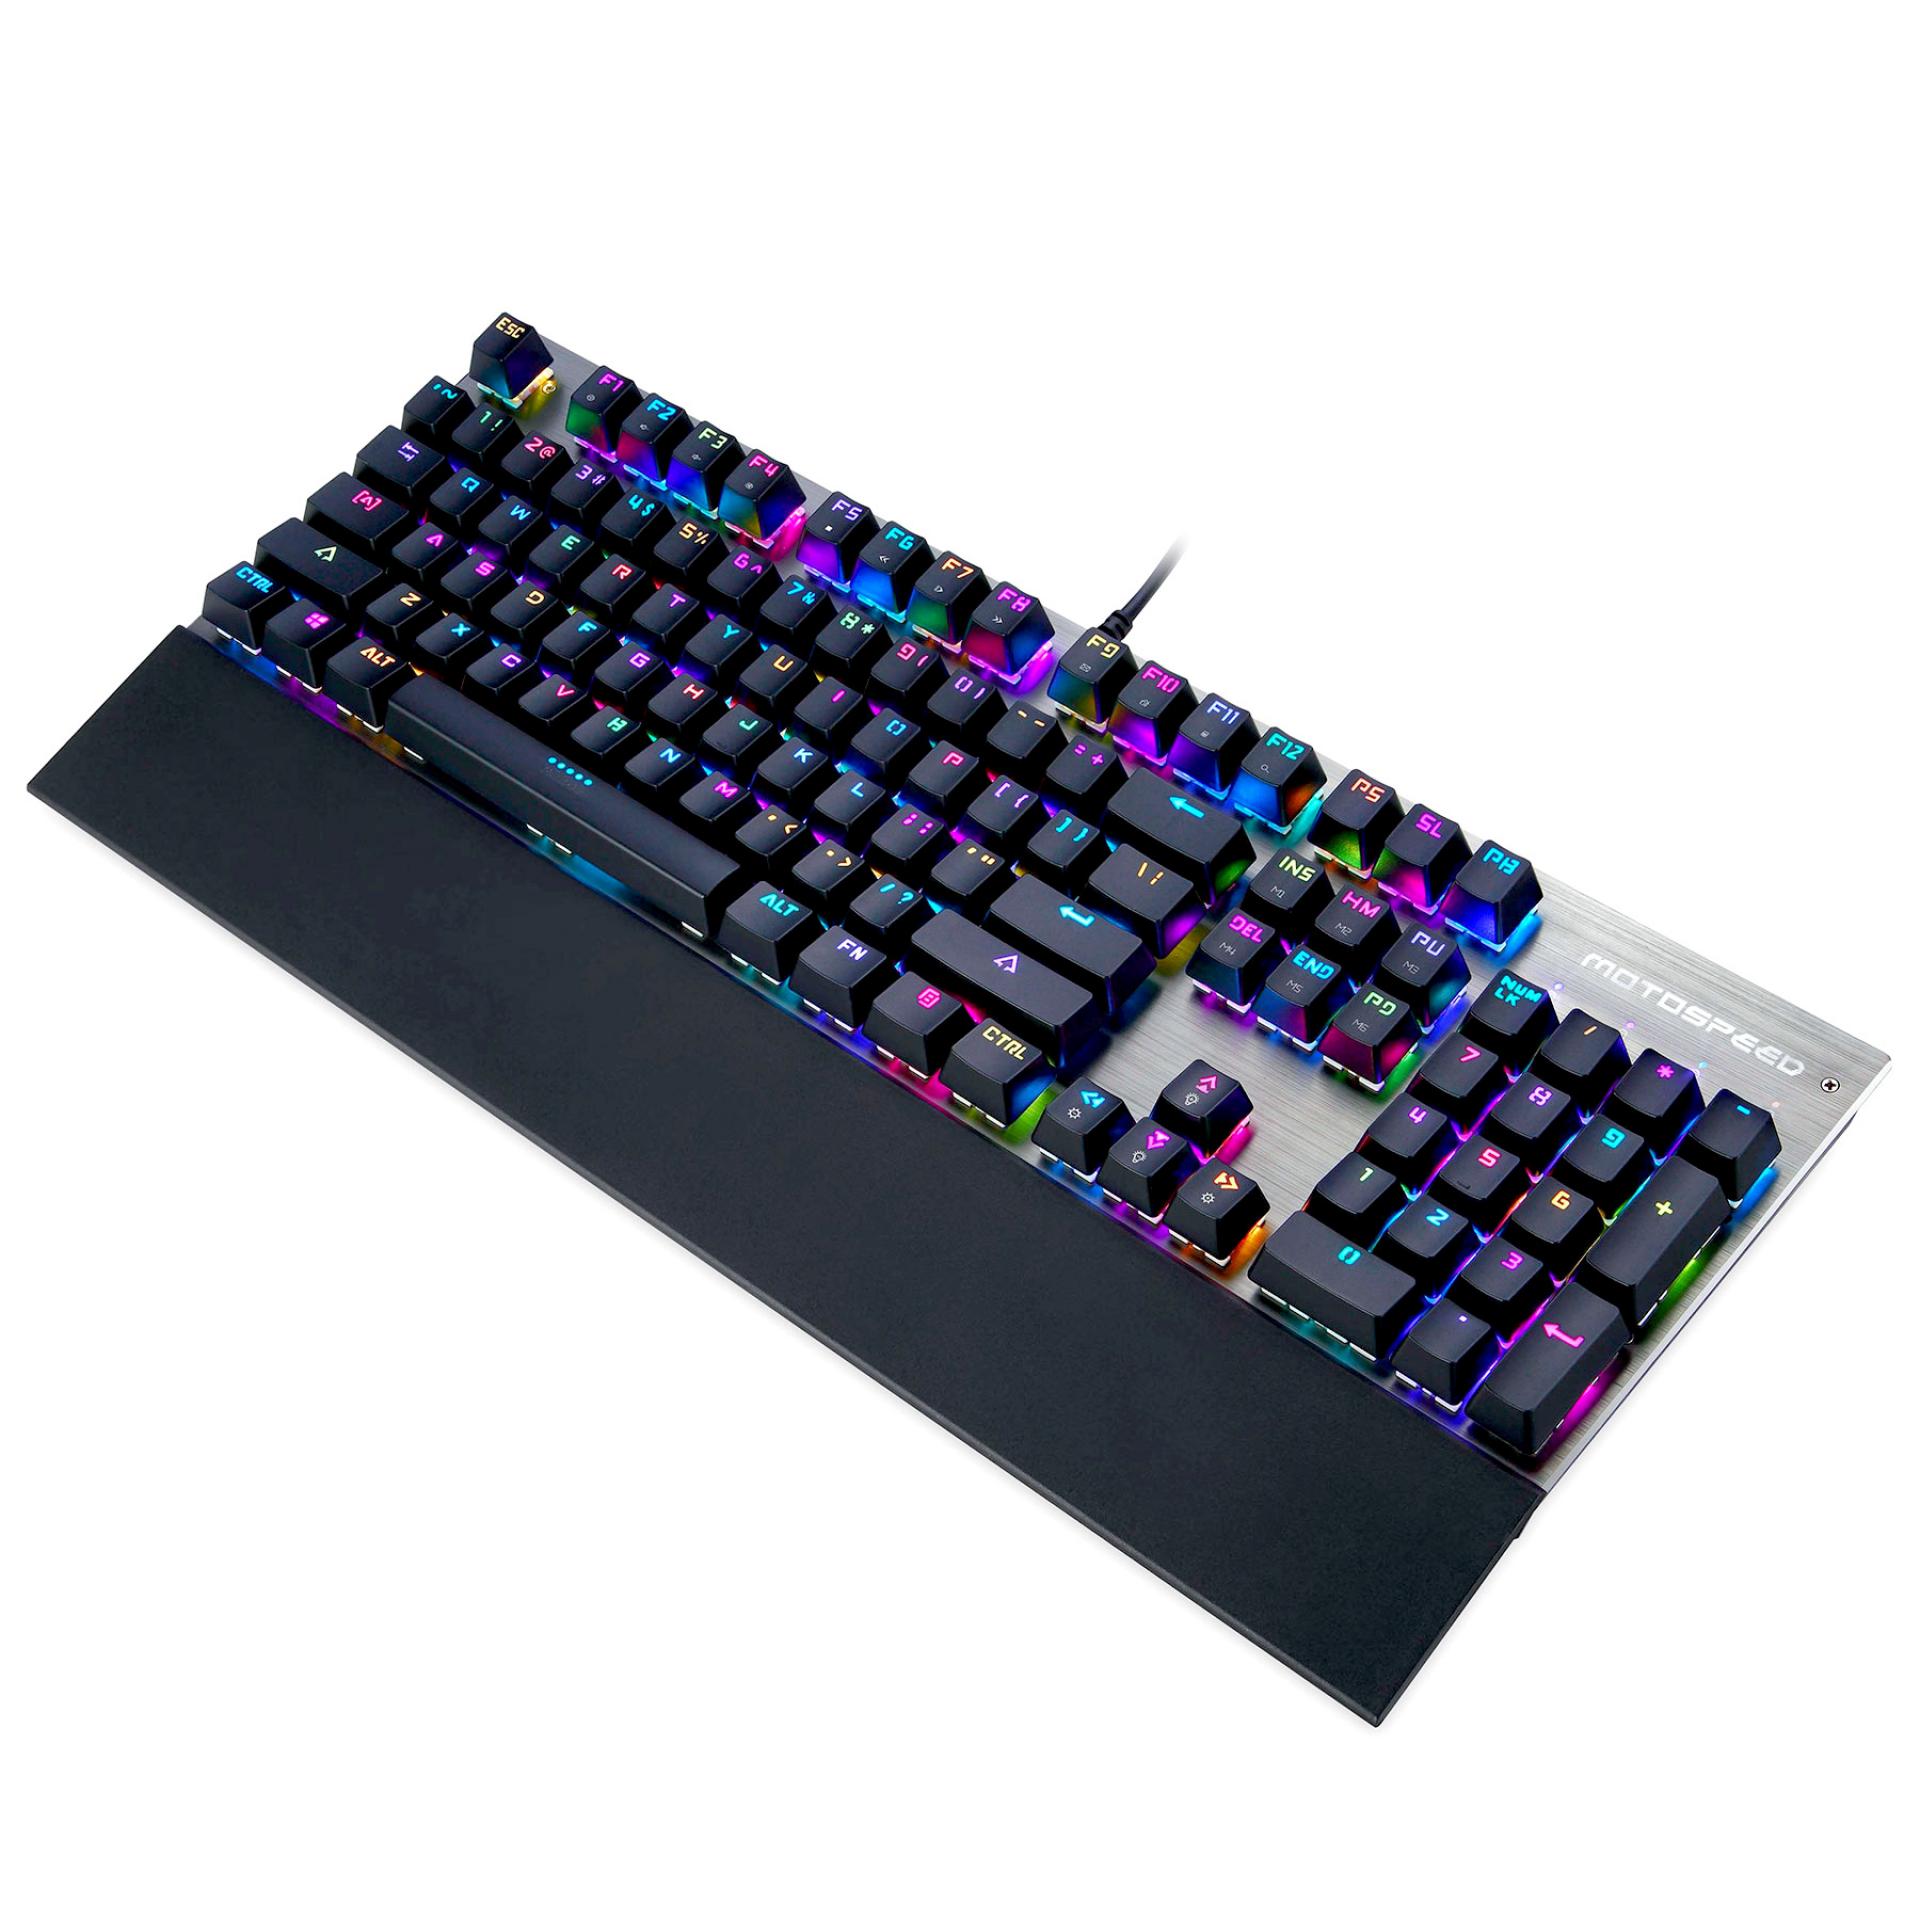 Motospeed CK108 RGB Wired Gaming Mechanical Keyboard - Outemu Switch